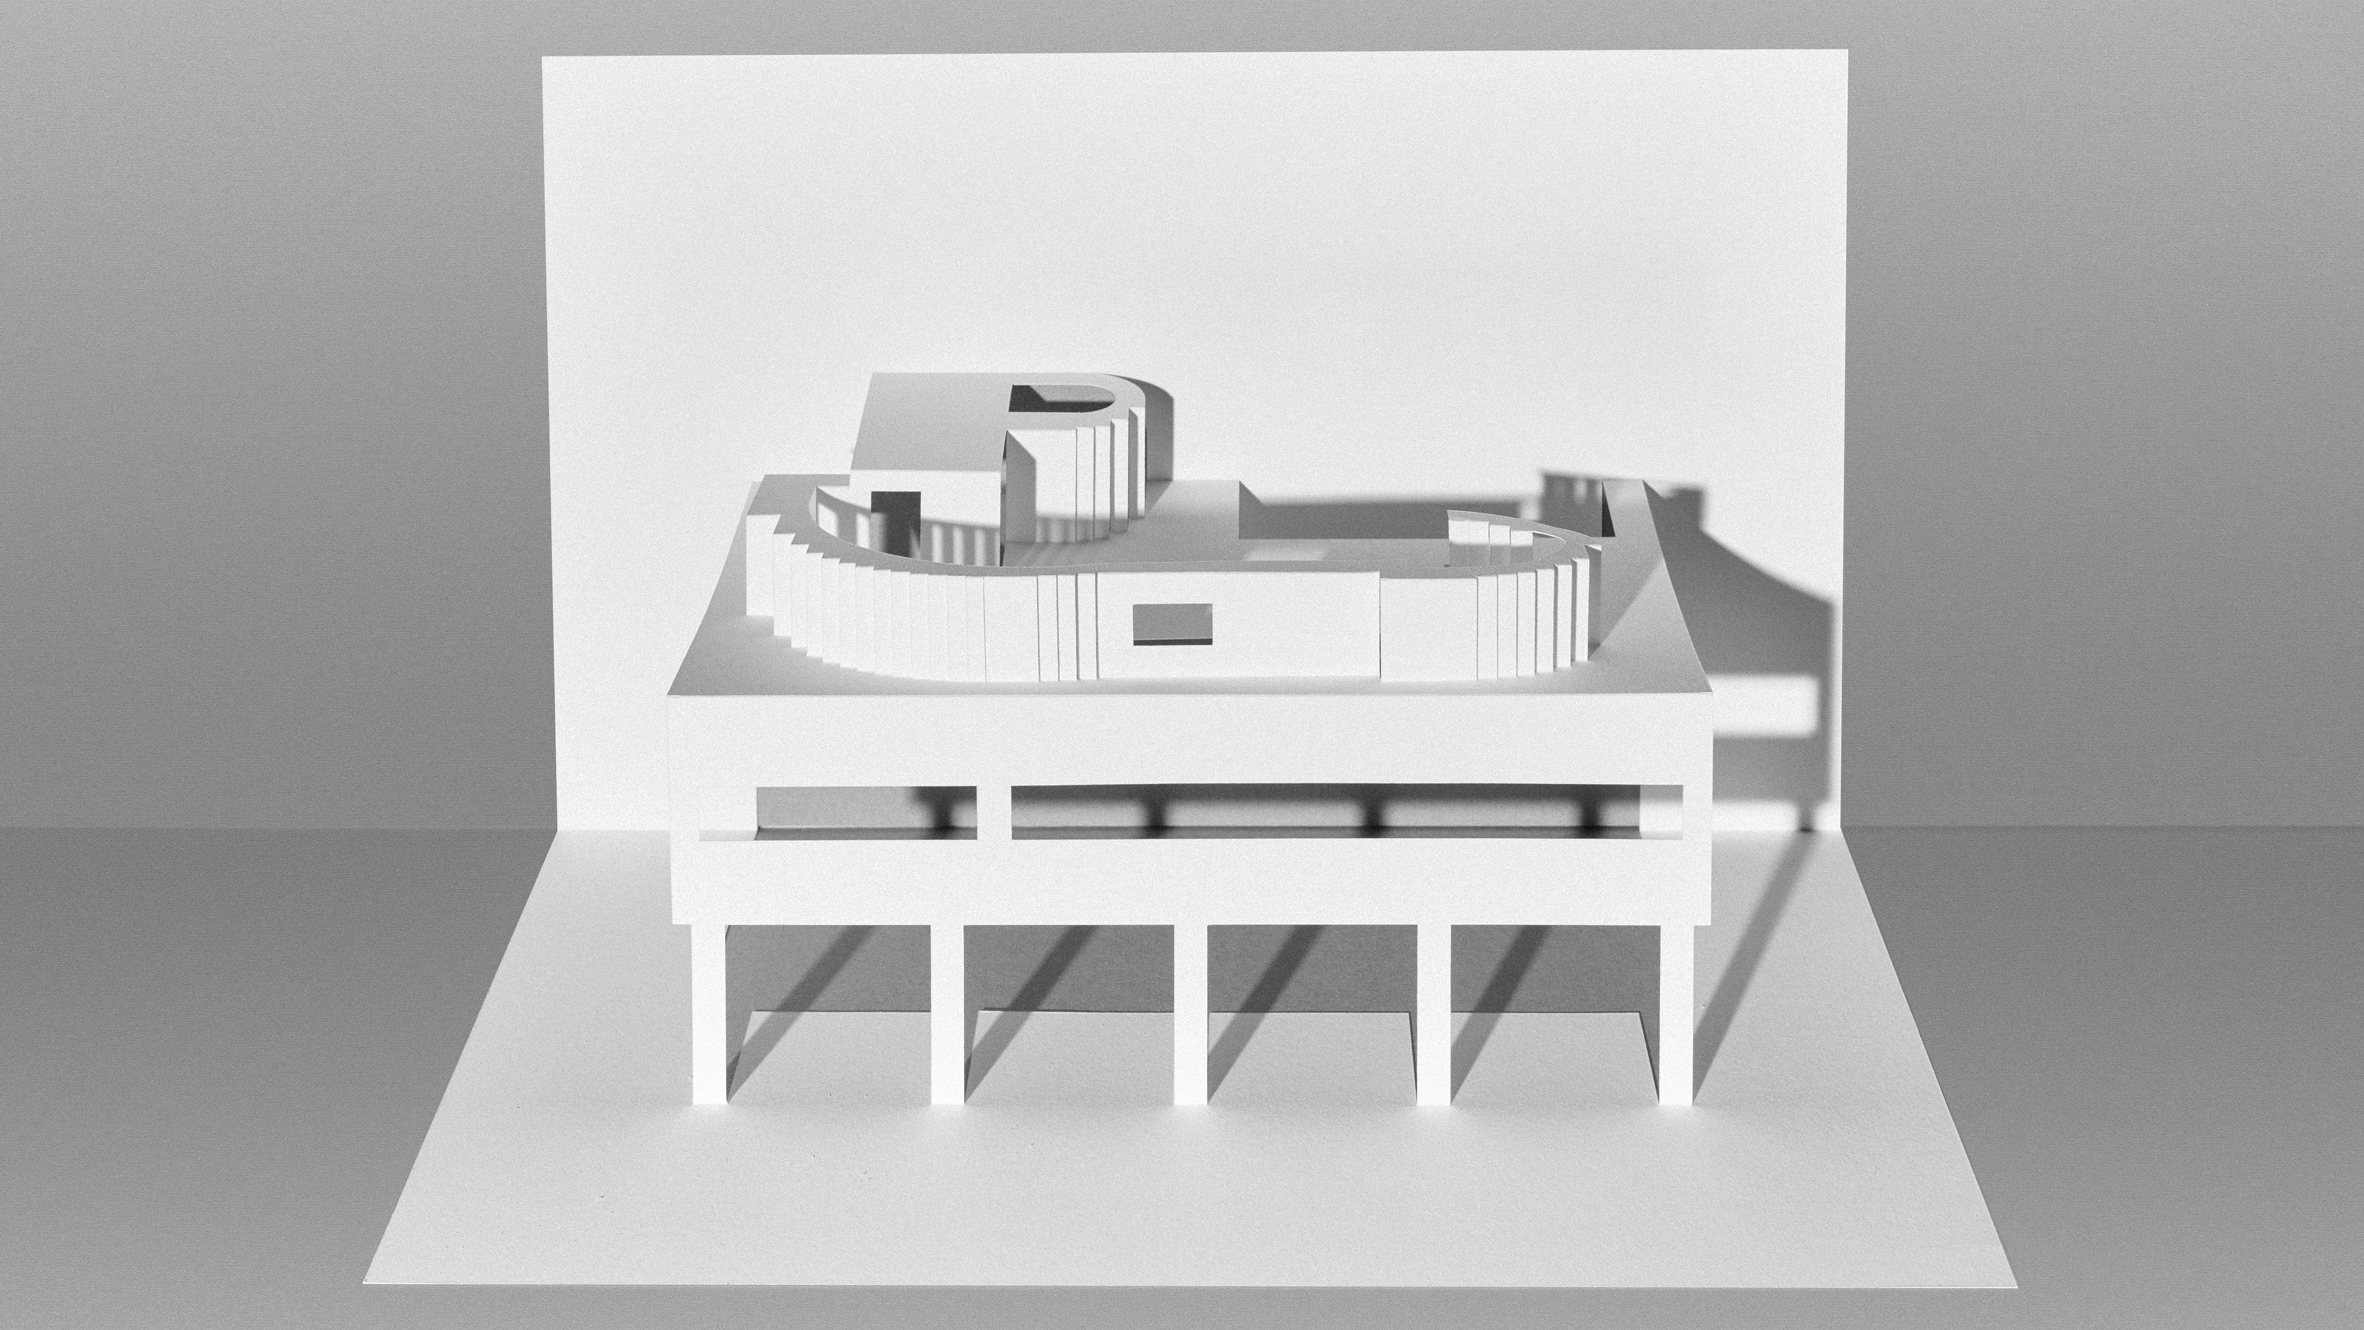 Paper Models Buildings Free Download